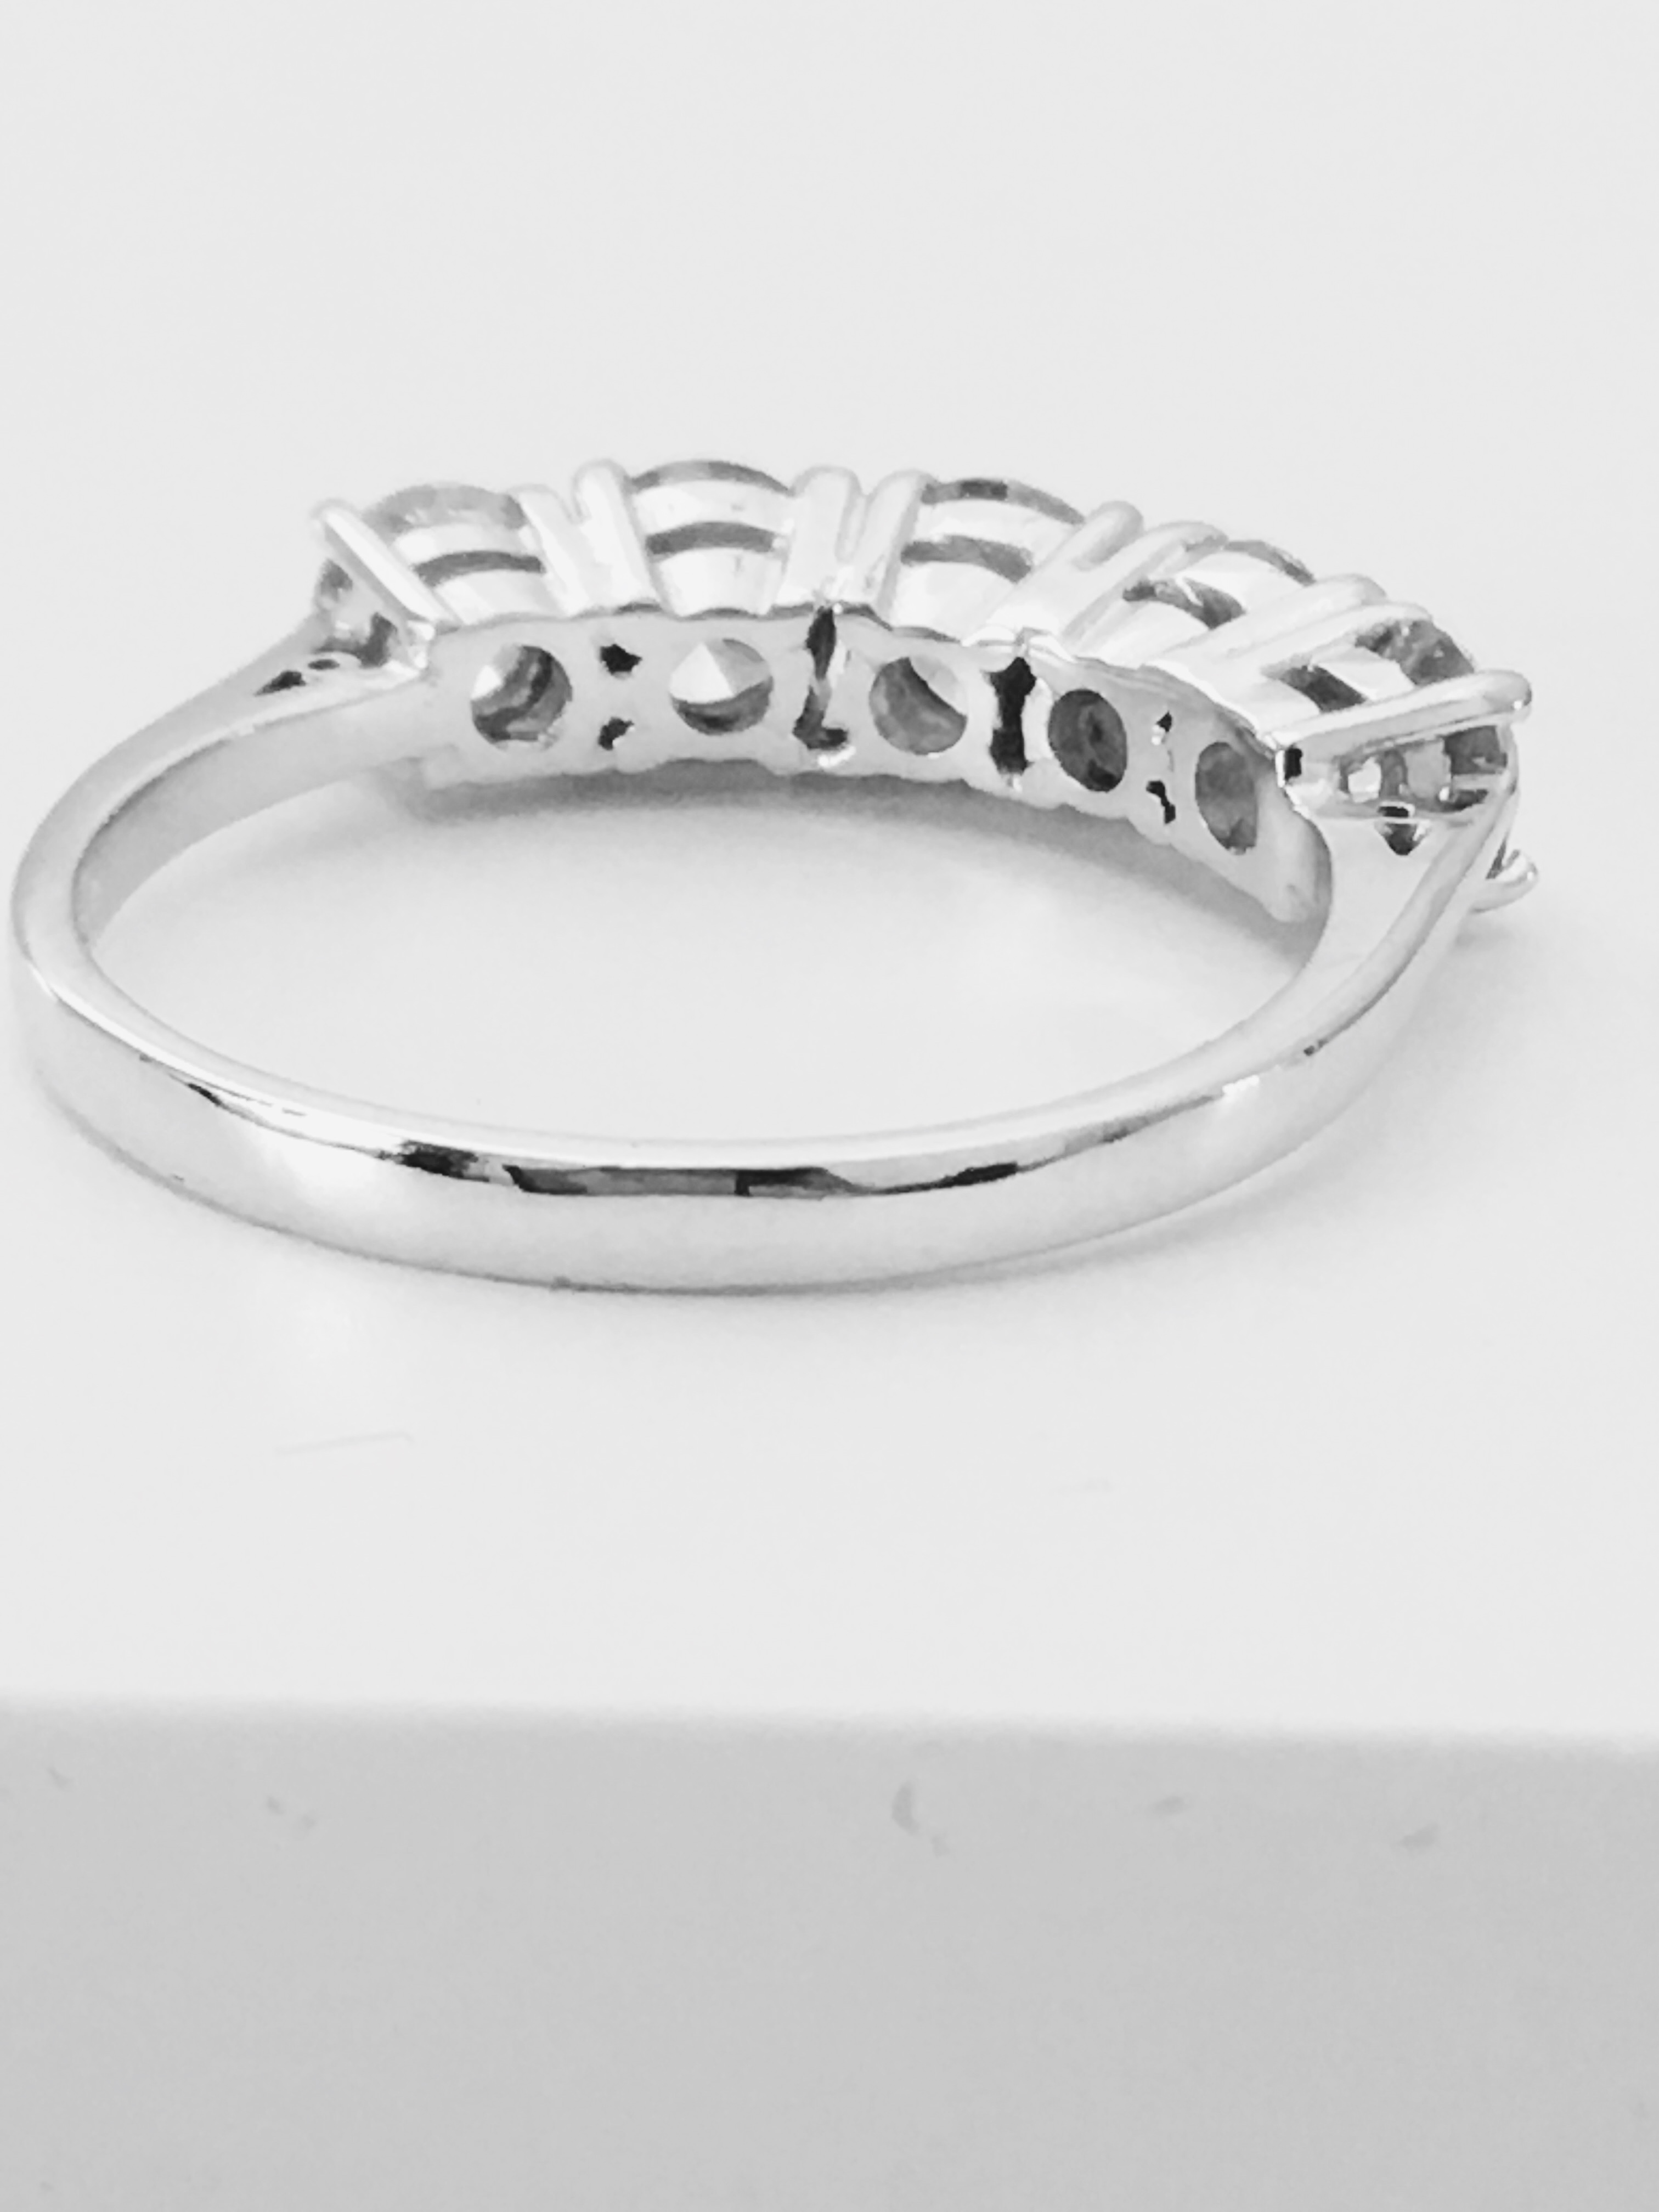 2.10ct diamon dfive stone Ring set in Platinum - Image 4 of 7